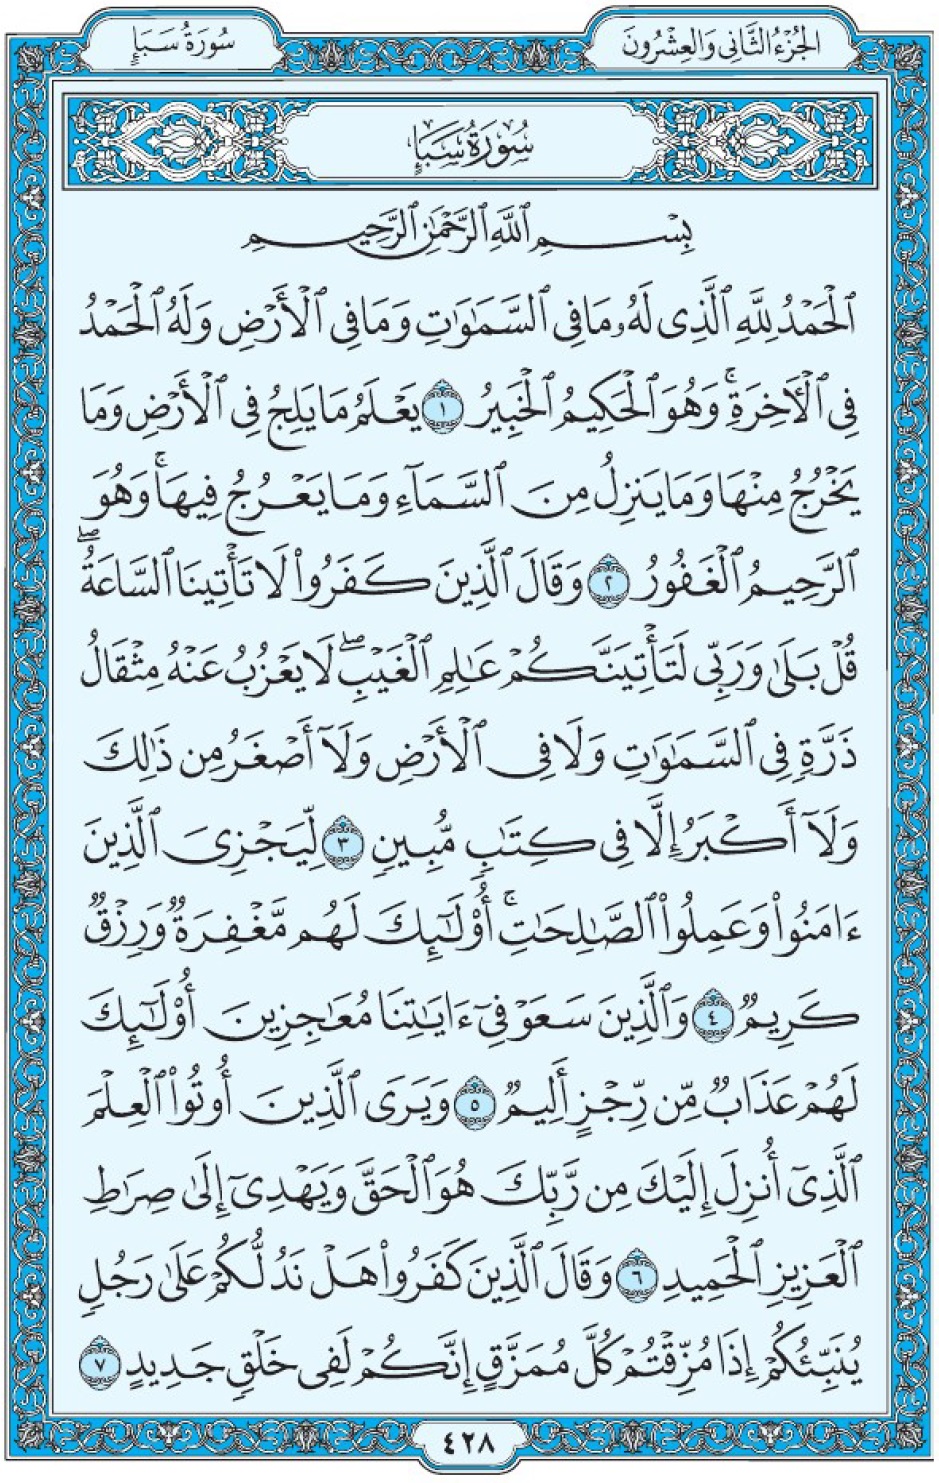 Коран Мединский мусхаф страница 428, сура 34 Саба سورة ٣٤ سبأ 